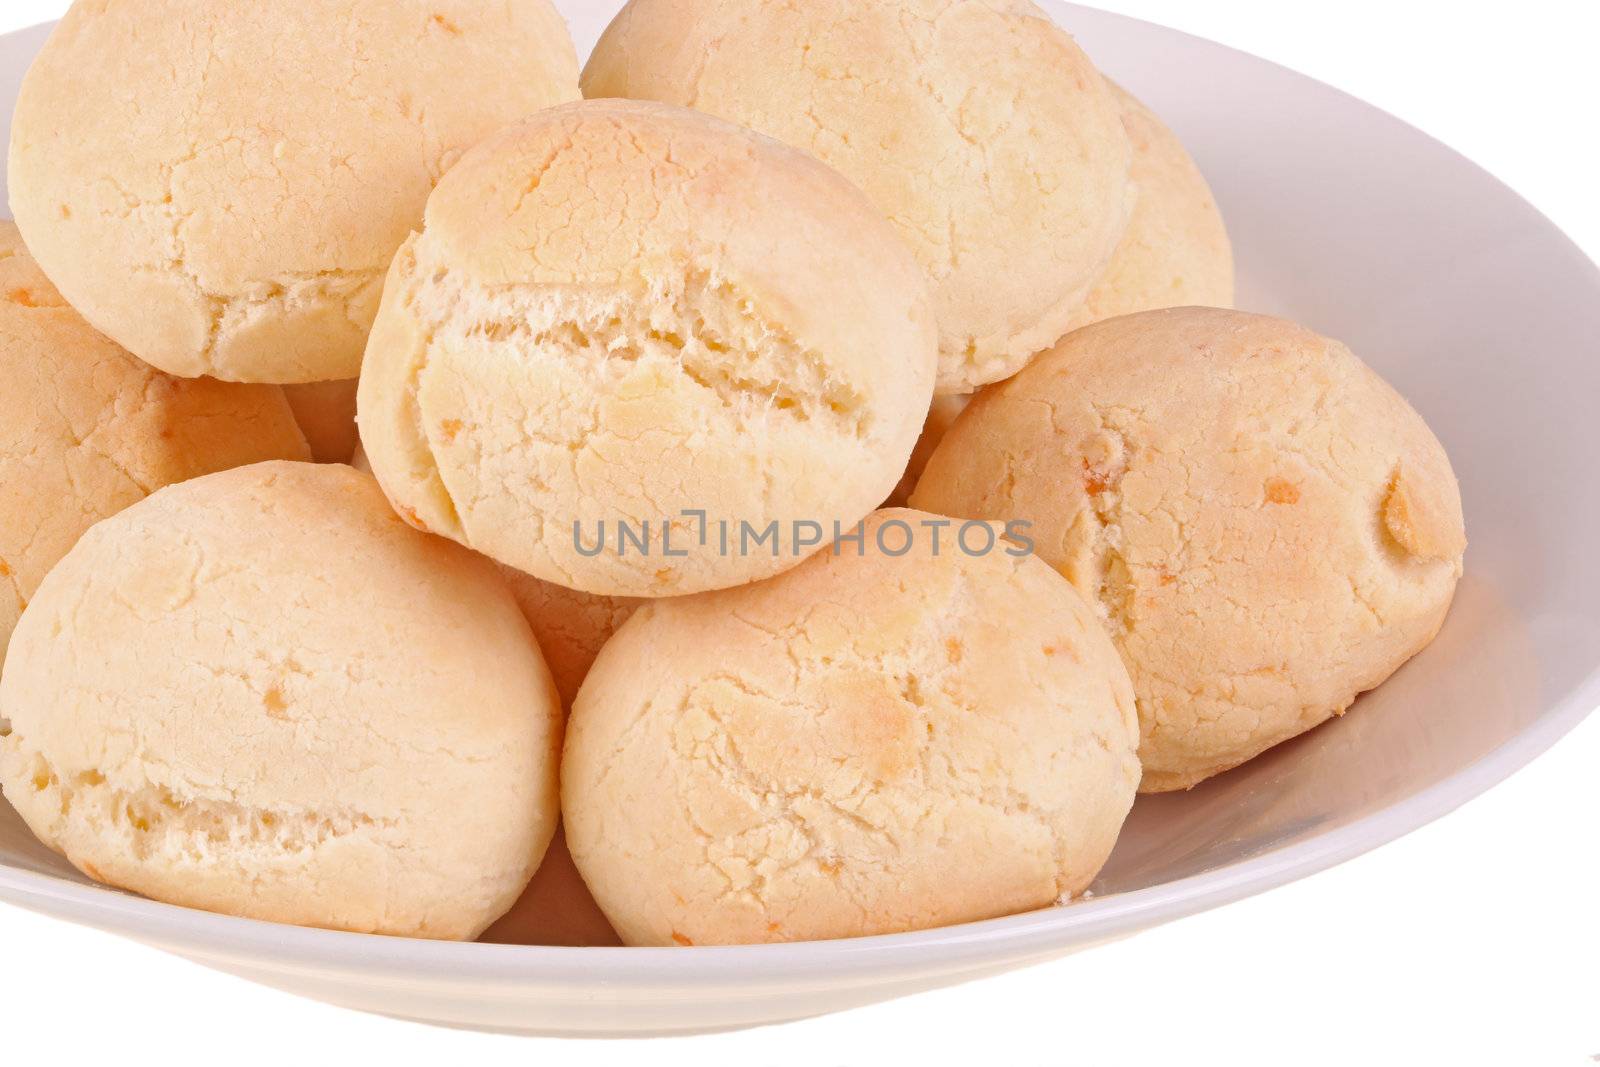 Closeup of several rolls of pan de yuca, the cheese bread made of tapioca (or yuca) flour that is very popular in Ecuador, also known as pandebono in Colombia or pao de queijo in Brazil